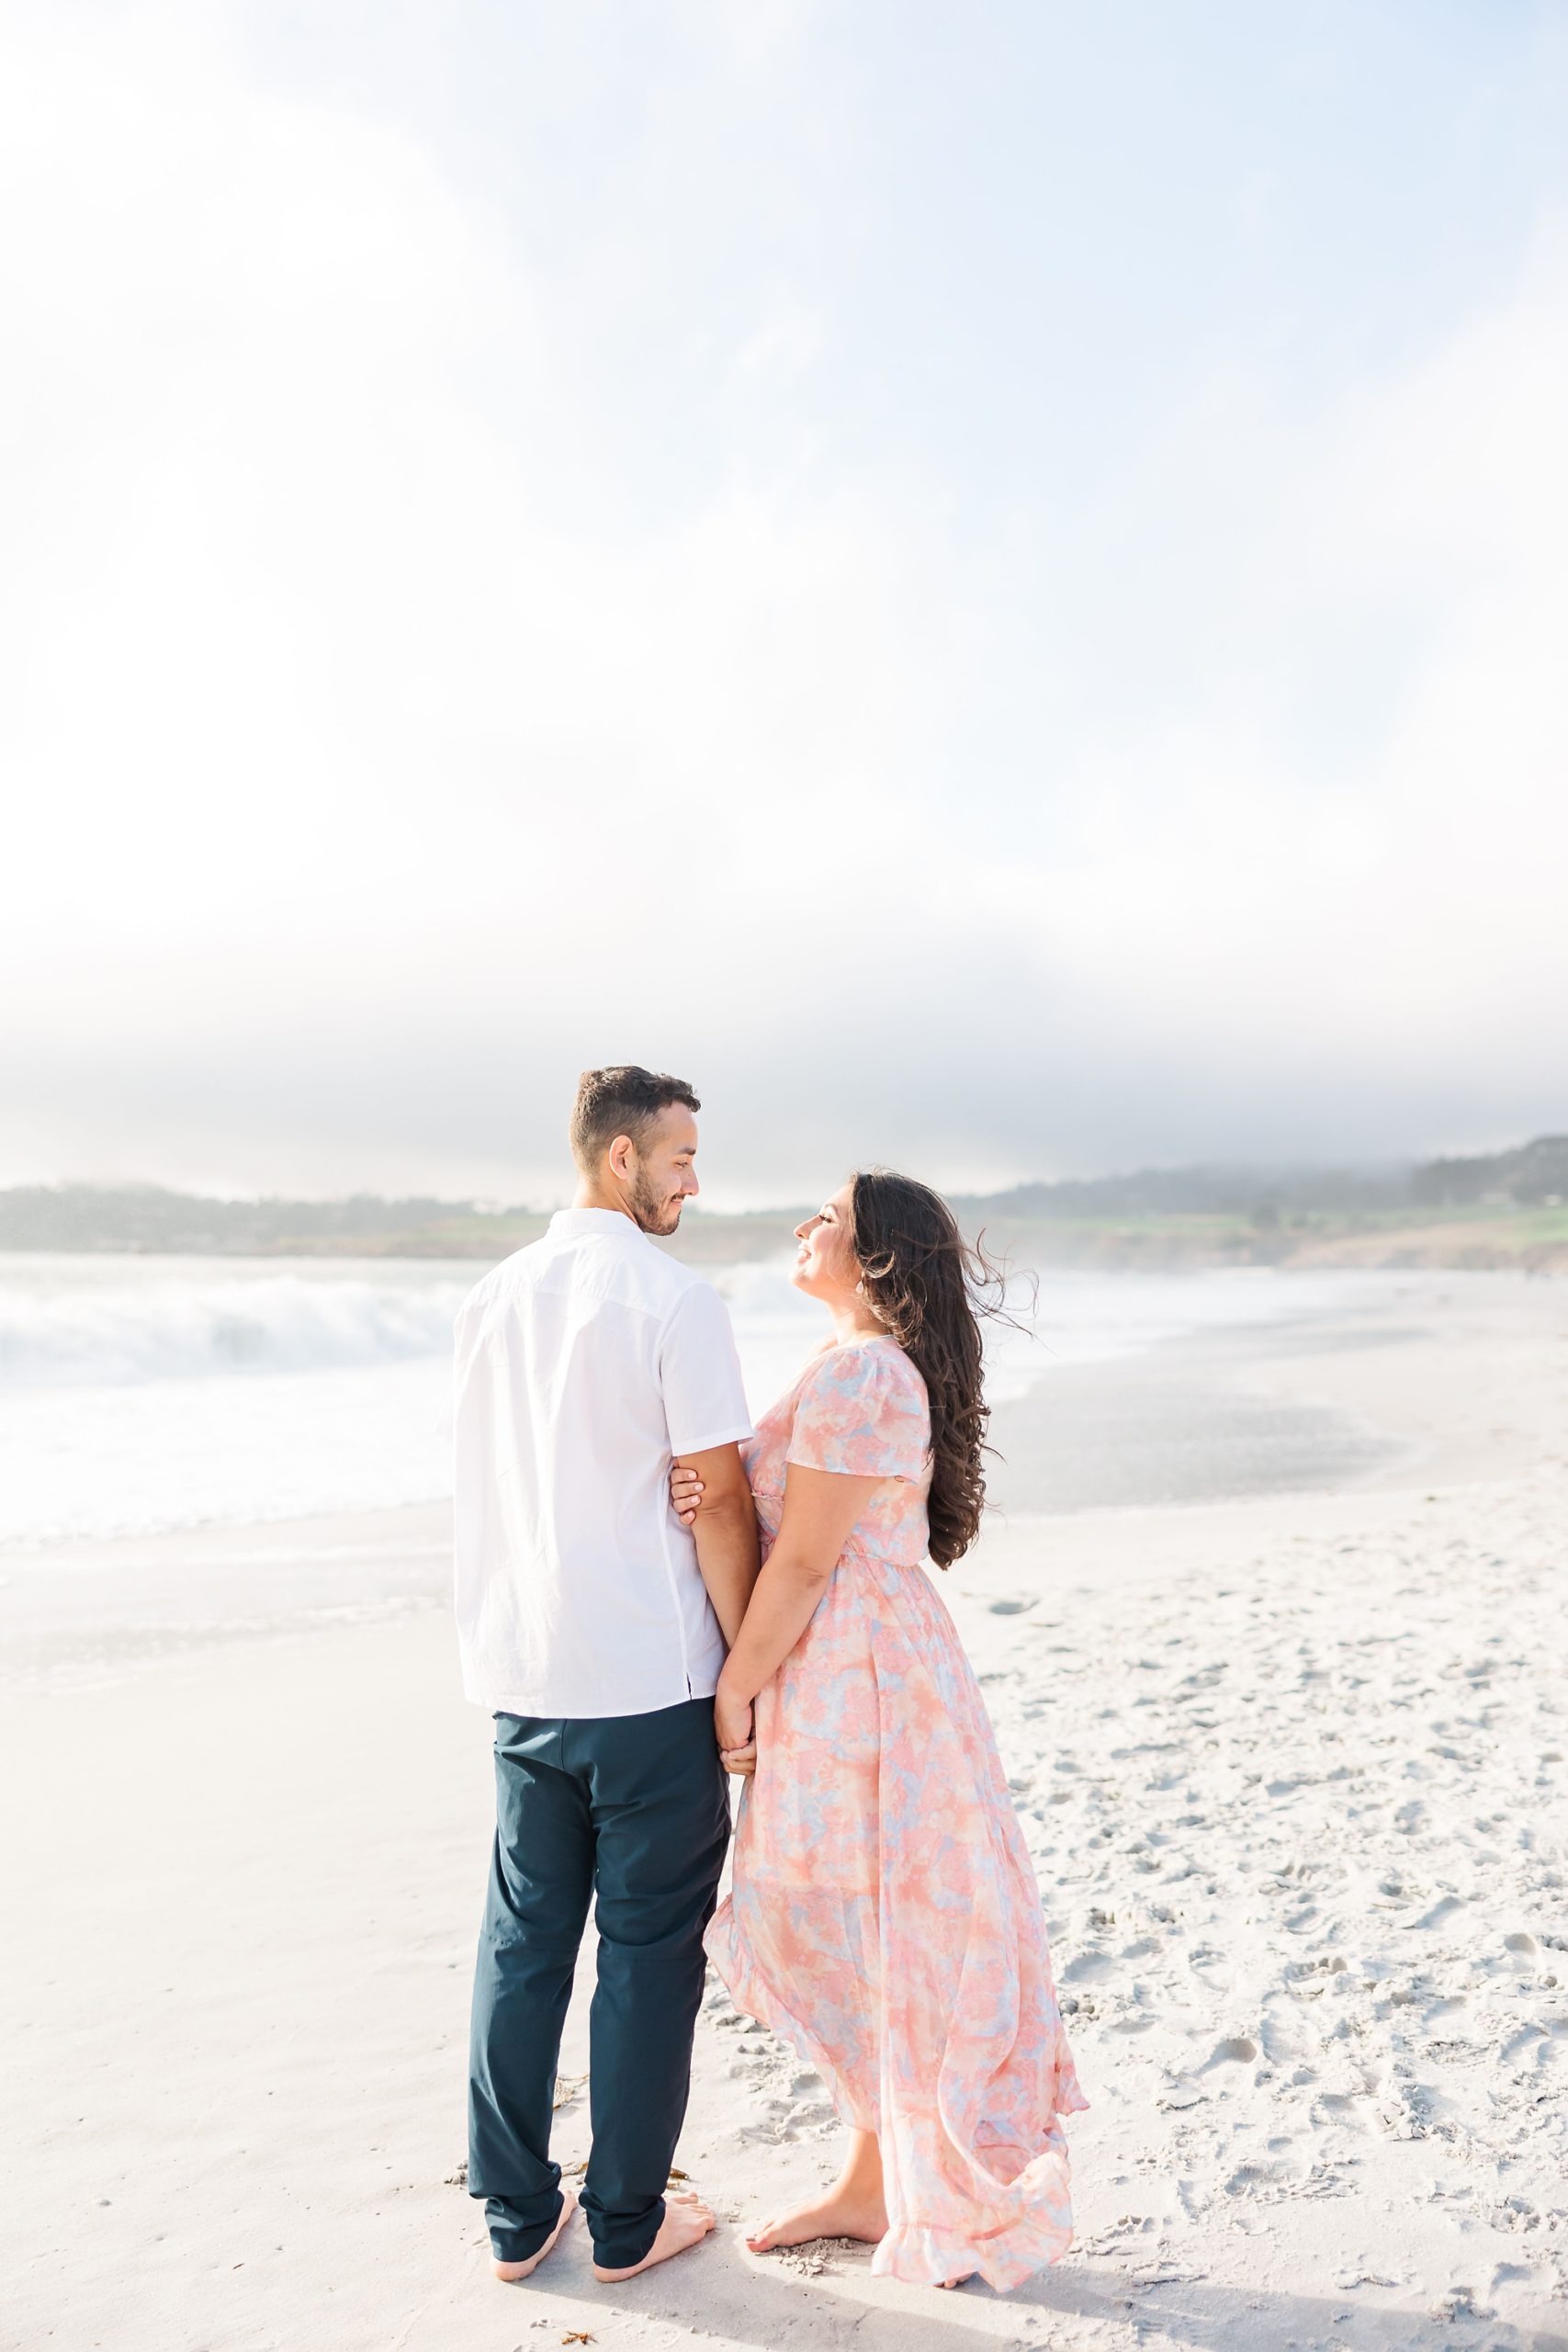 beautiful beach photo of couple holding hands on beach